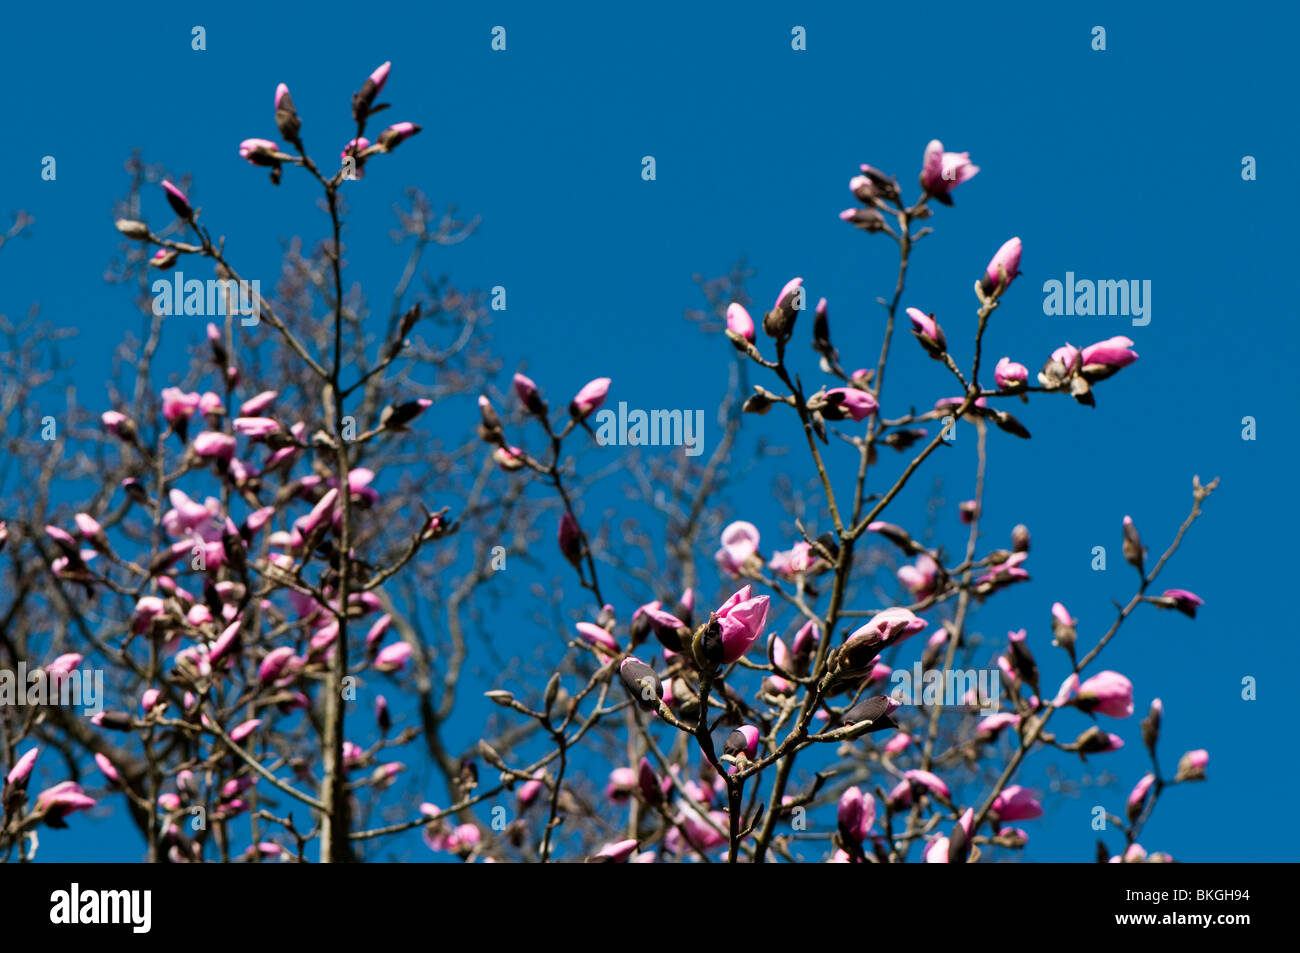 Rosa Magnolie Blüten gegen den blauen Himmel im Frühjahr Stockfoto